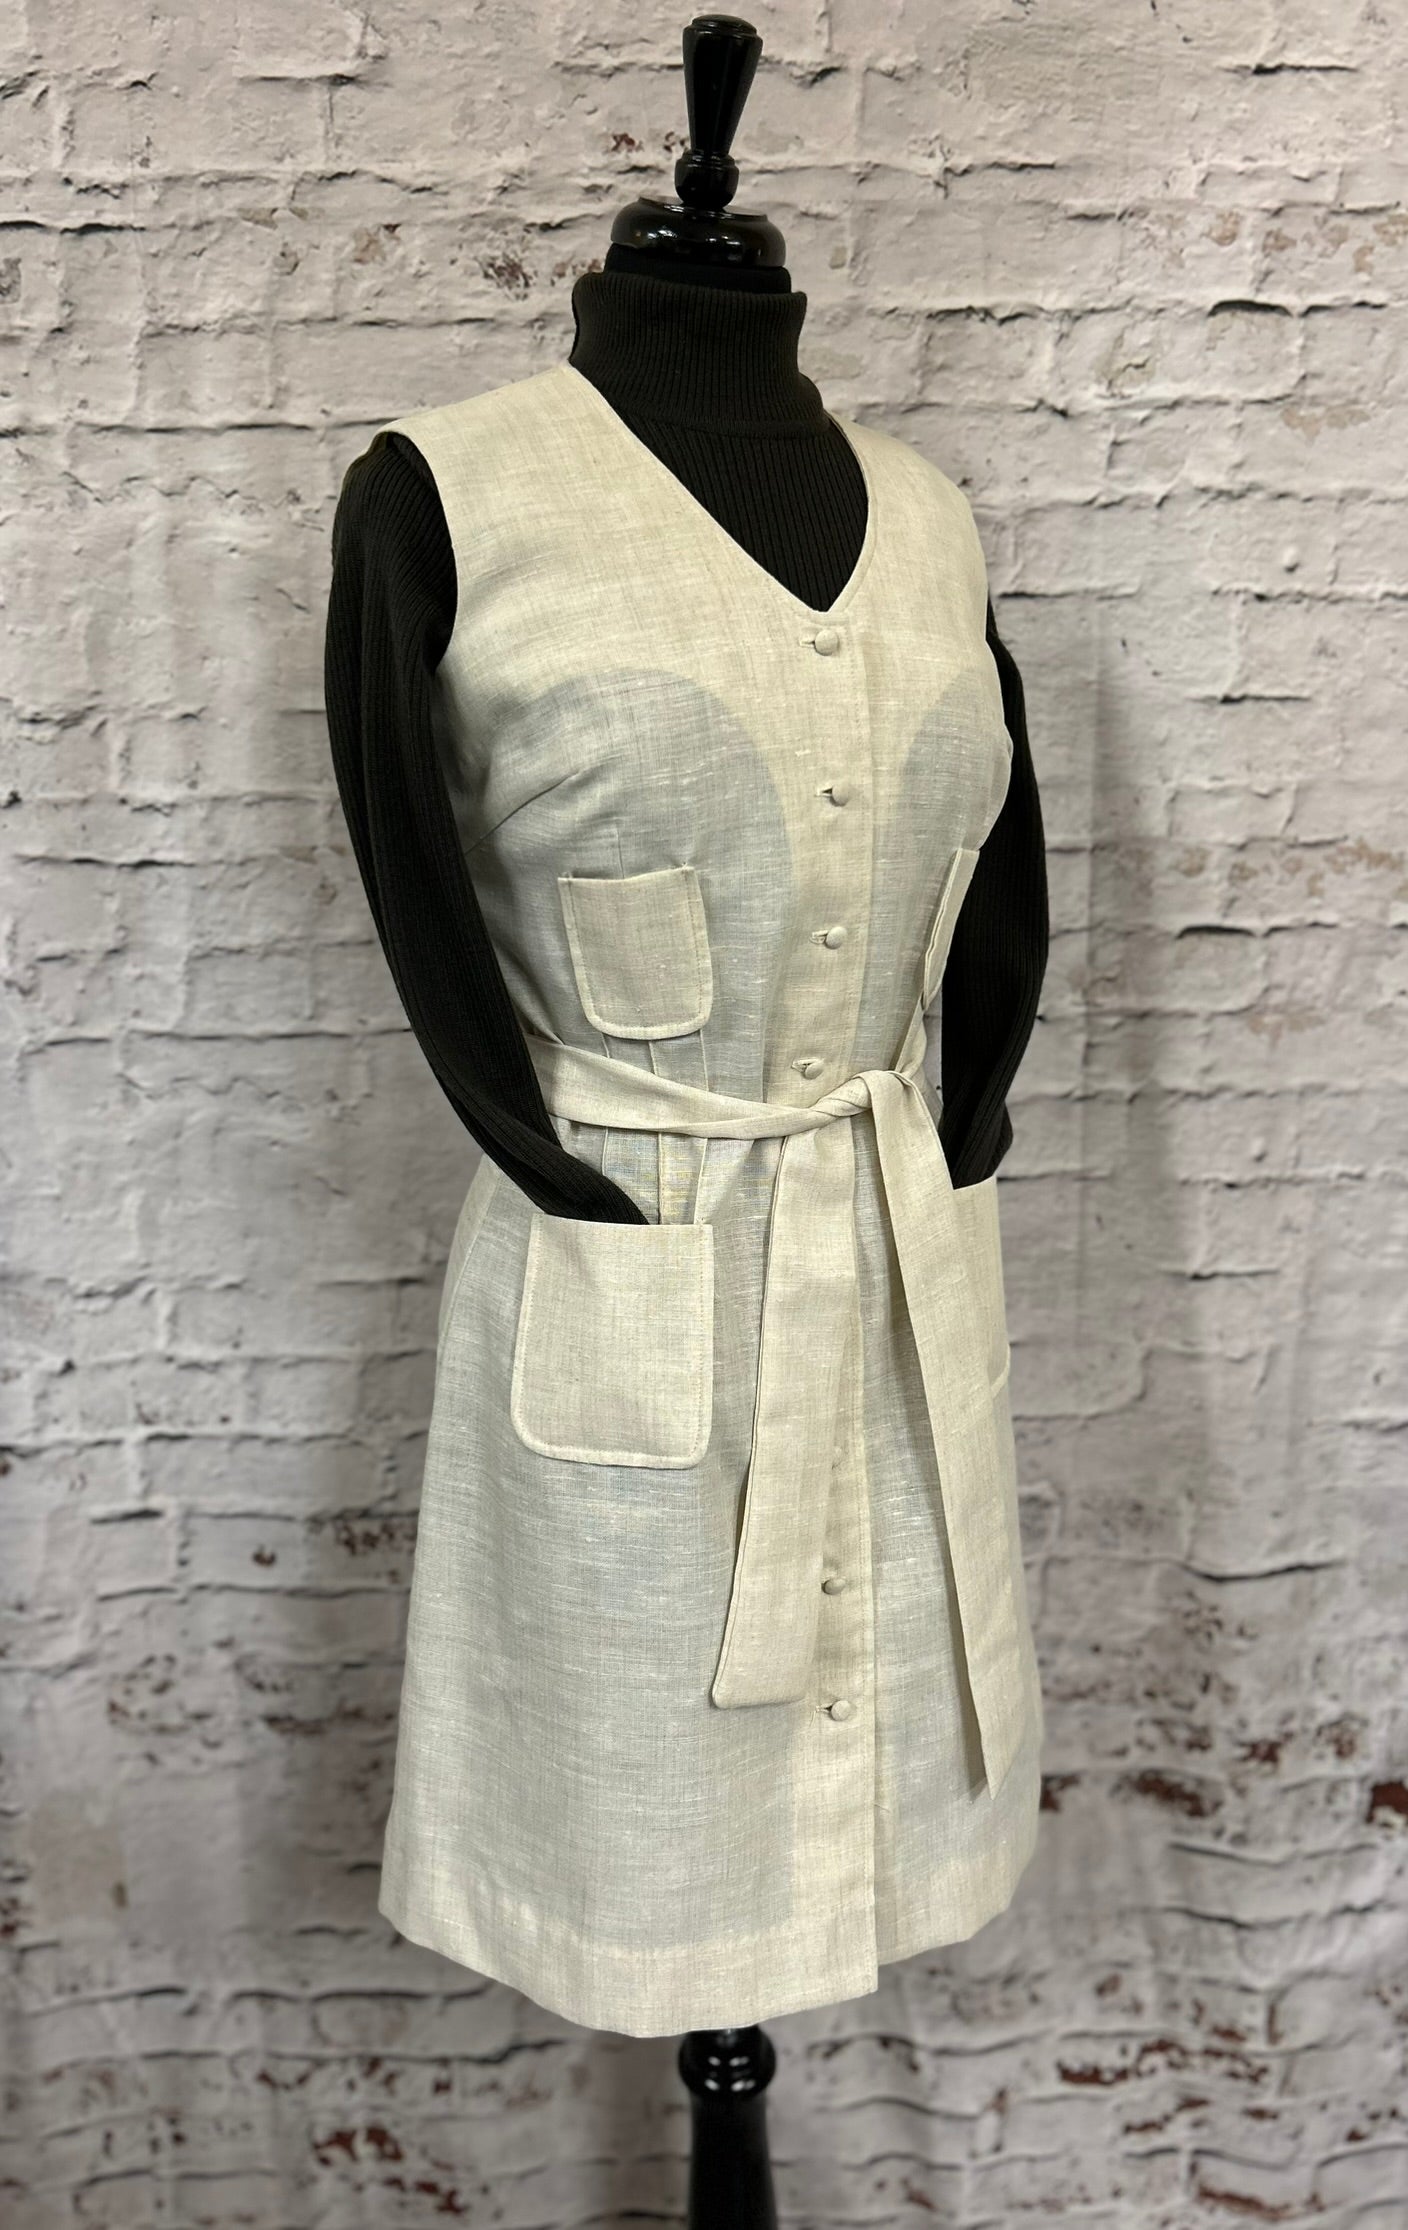 1960s Cream Knee Length Tie-Waist Dress with Pockets Size 8-10